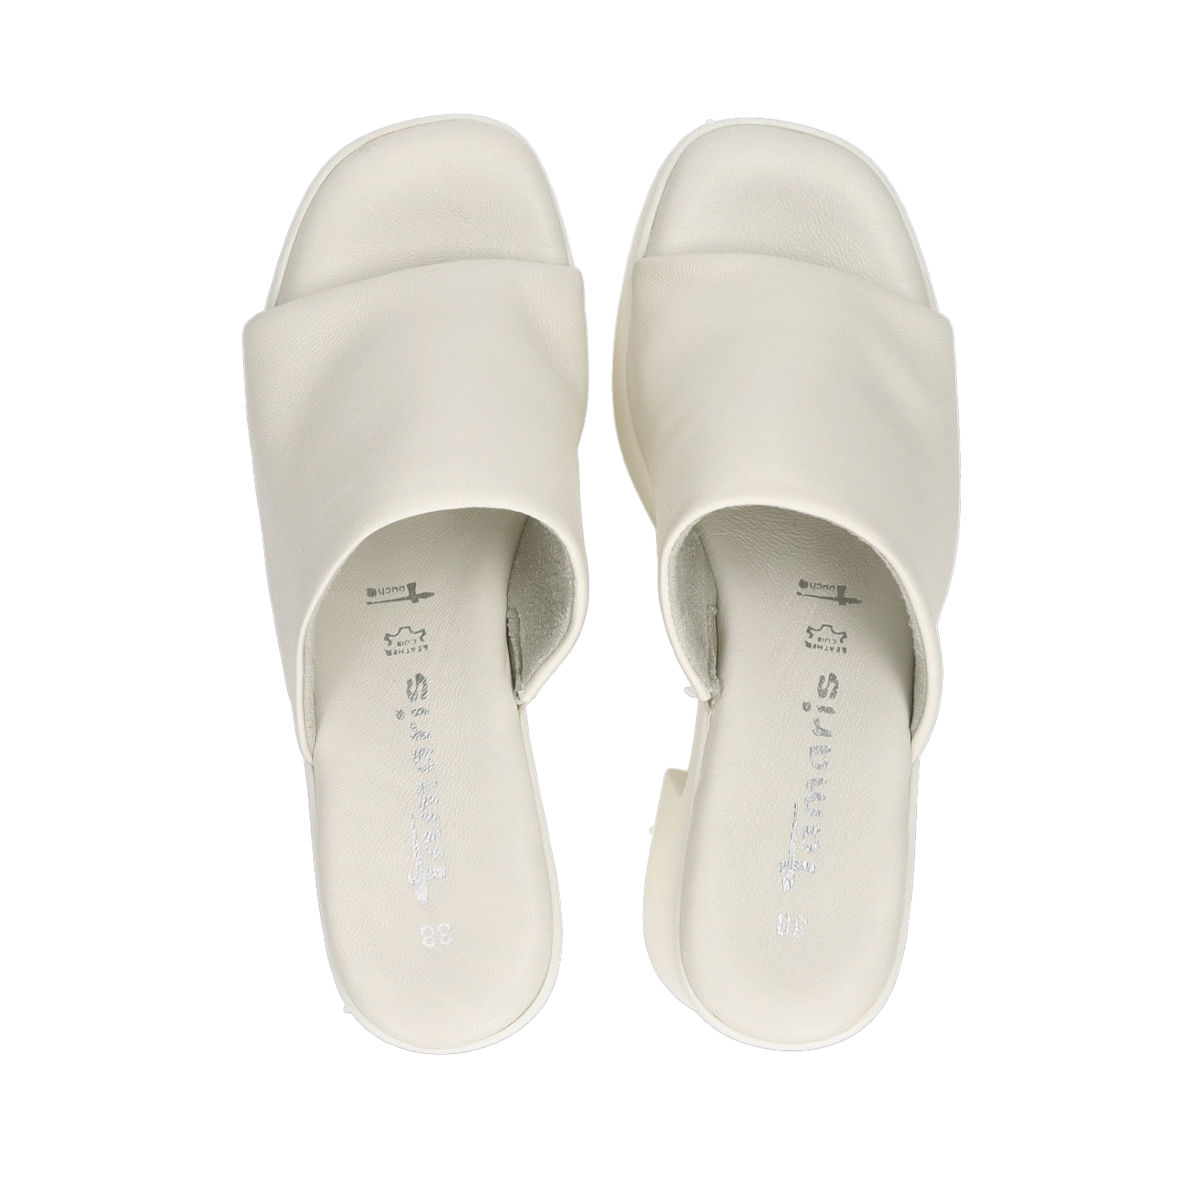 Reis binnen Pijnboom Tamaris women's leather slippers - white | Robel.shoes